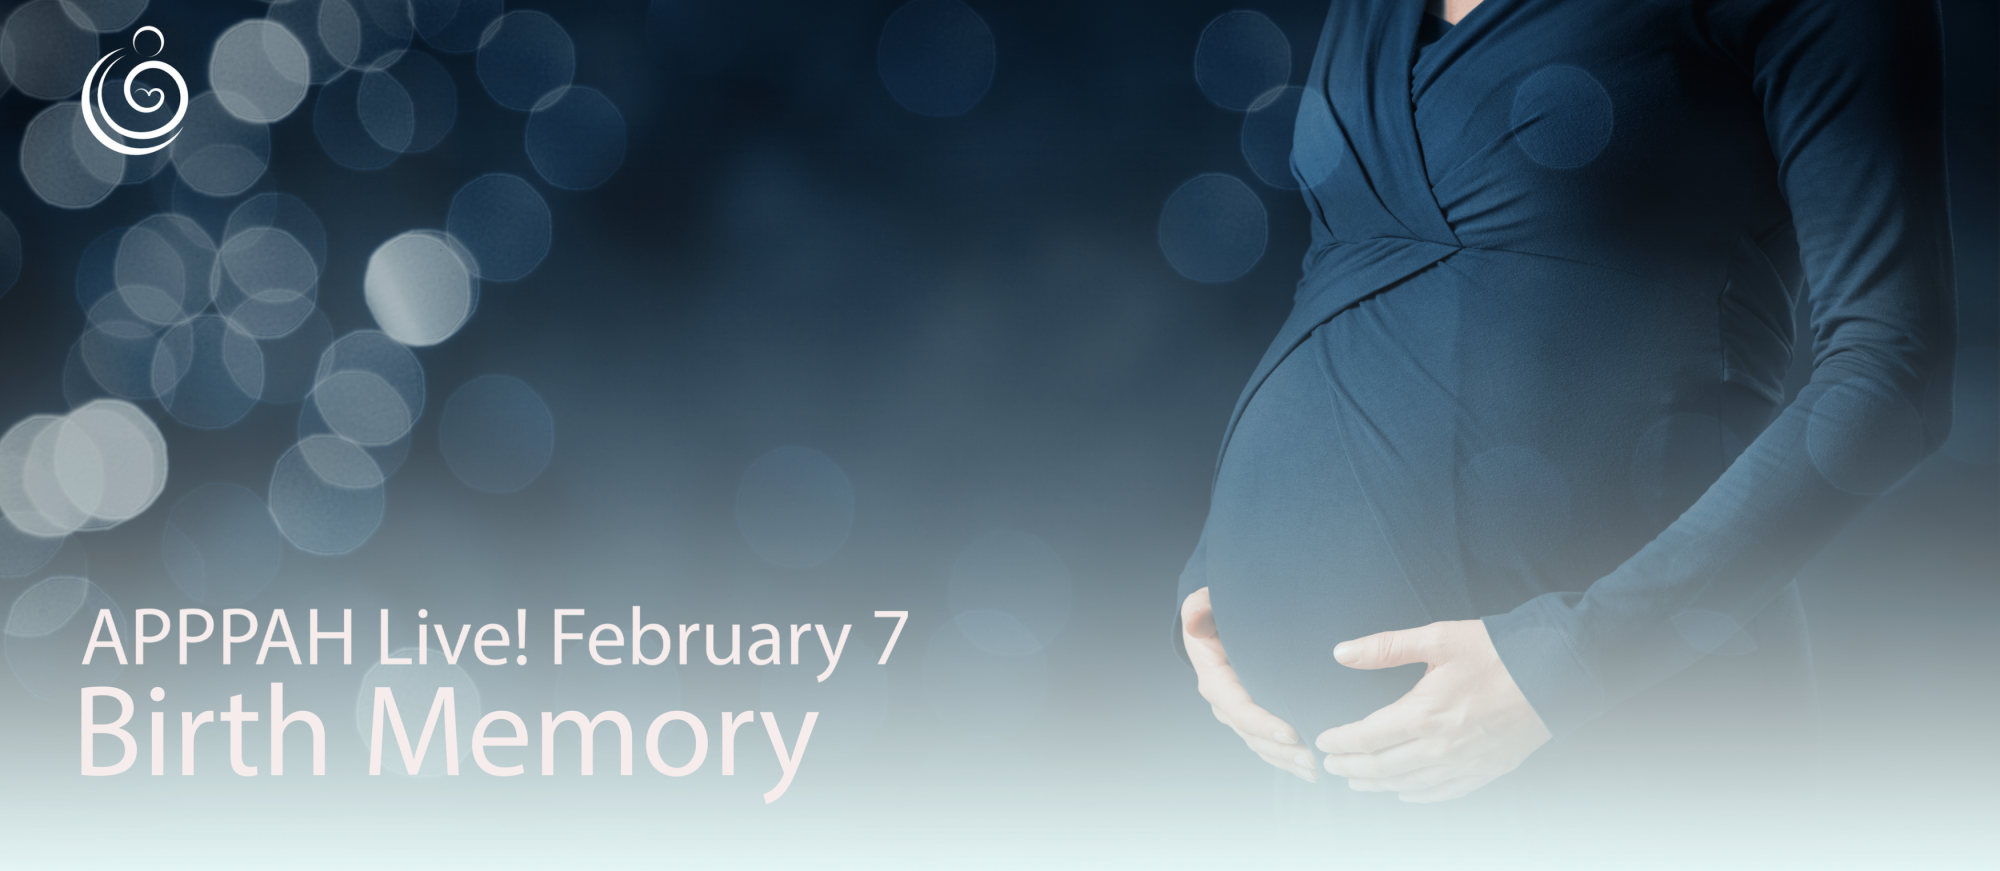 Birth Memory 2.7.22